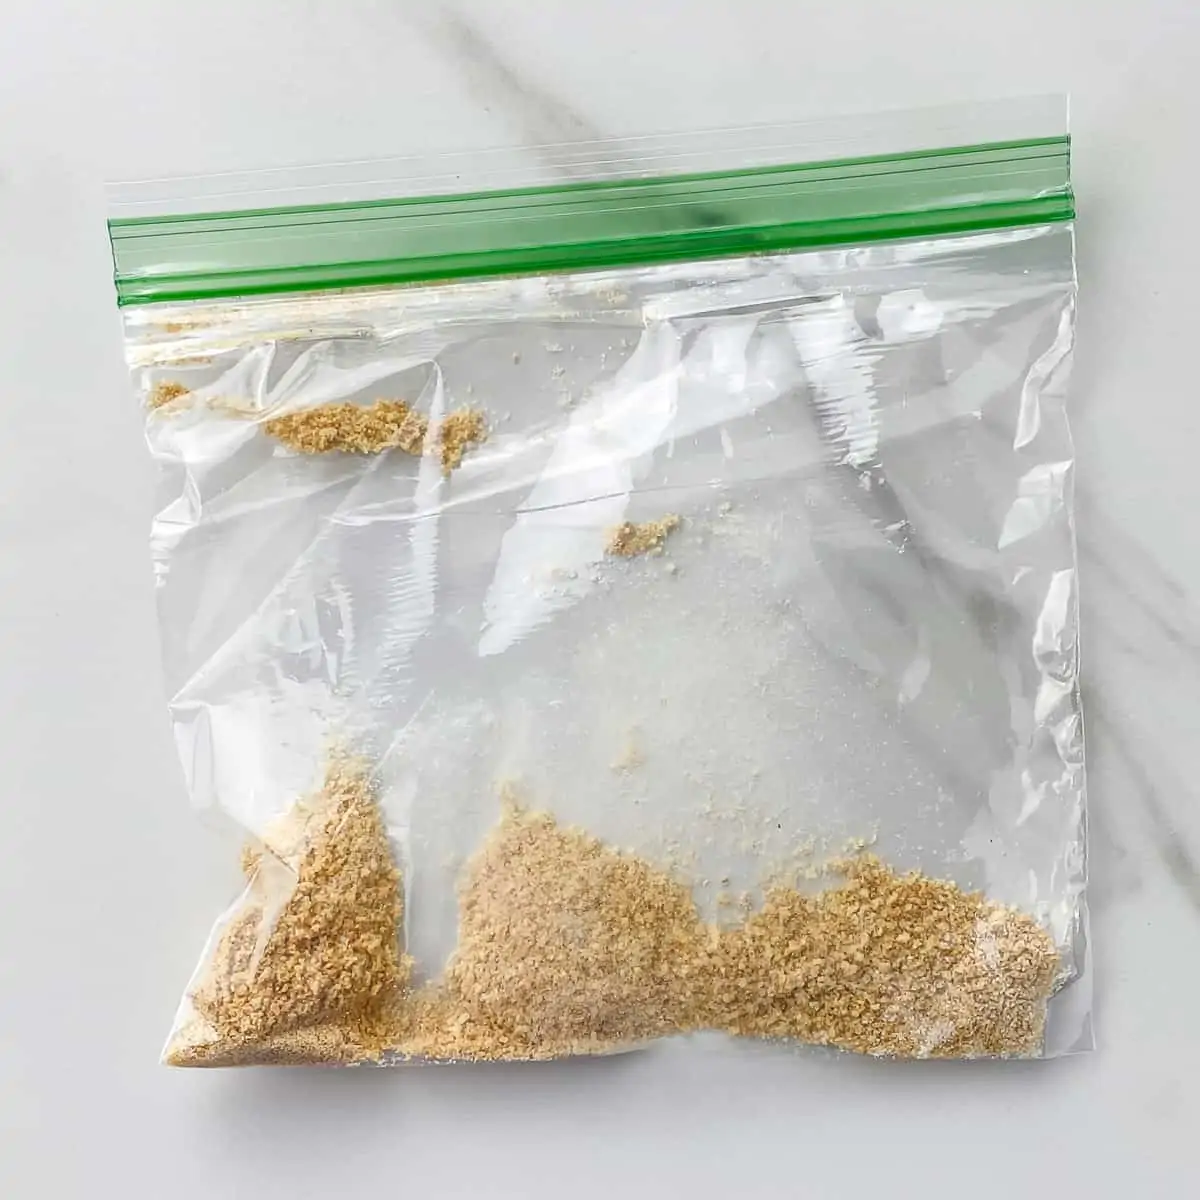 crushed graham cracker in a plastic bag